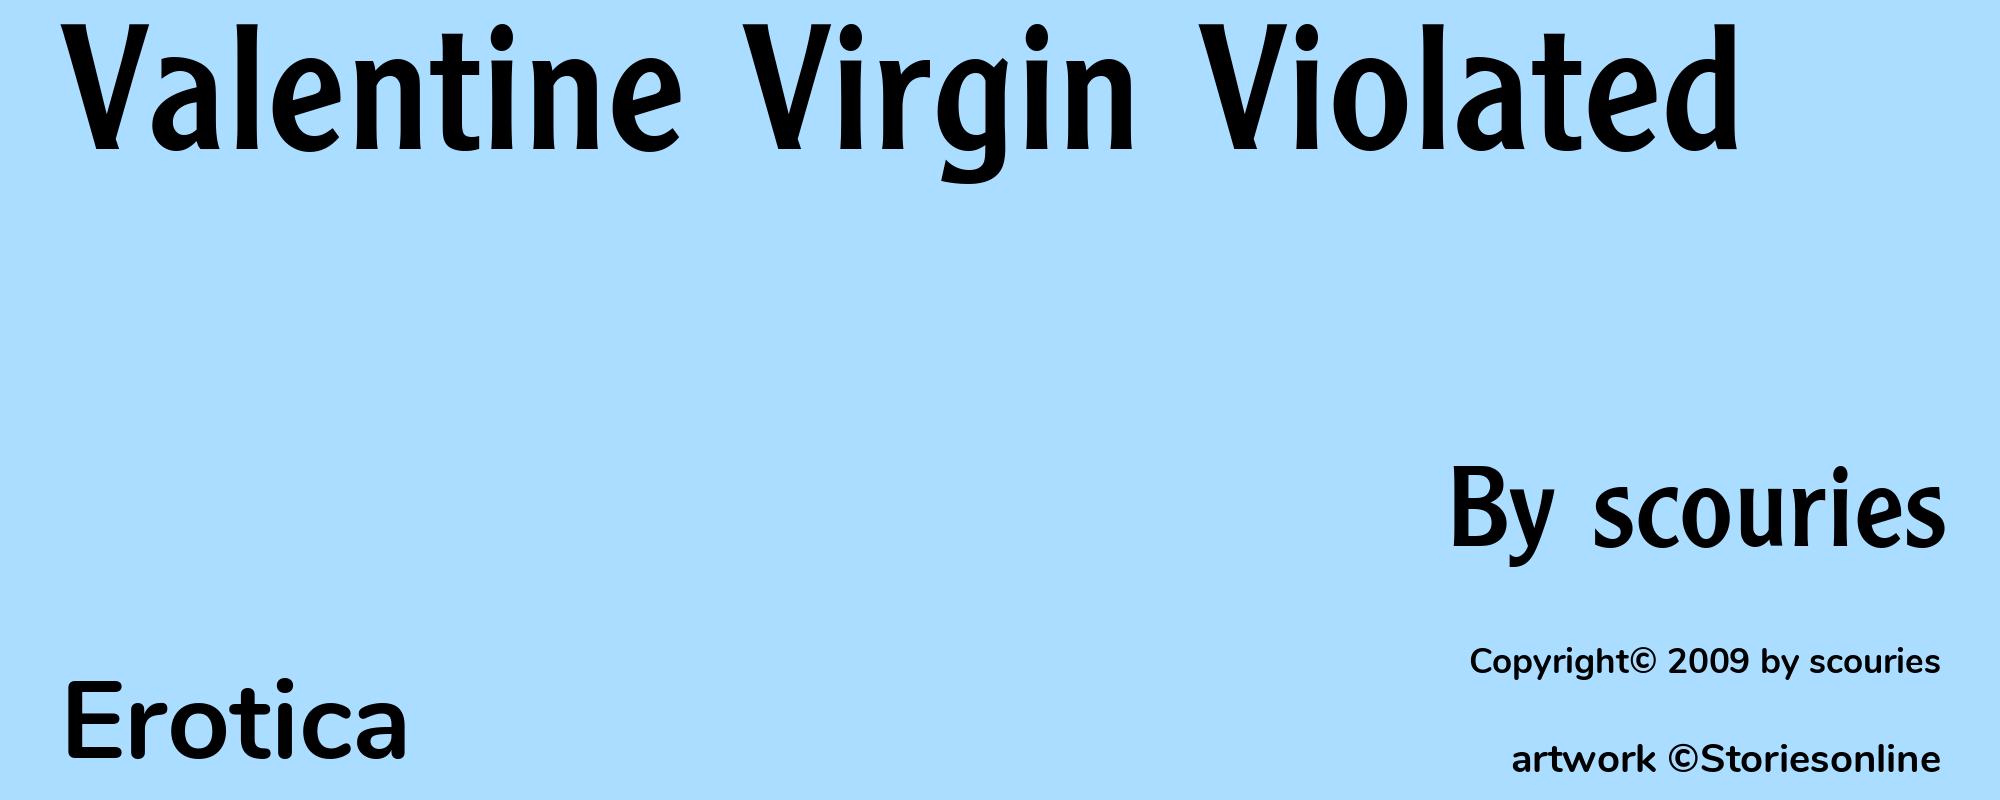 Valentine Virgin Violated - Cover